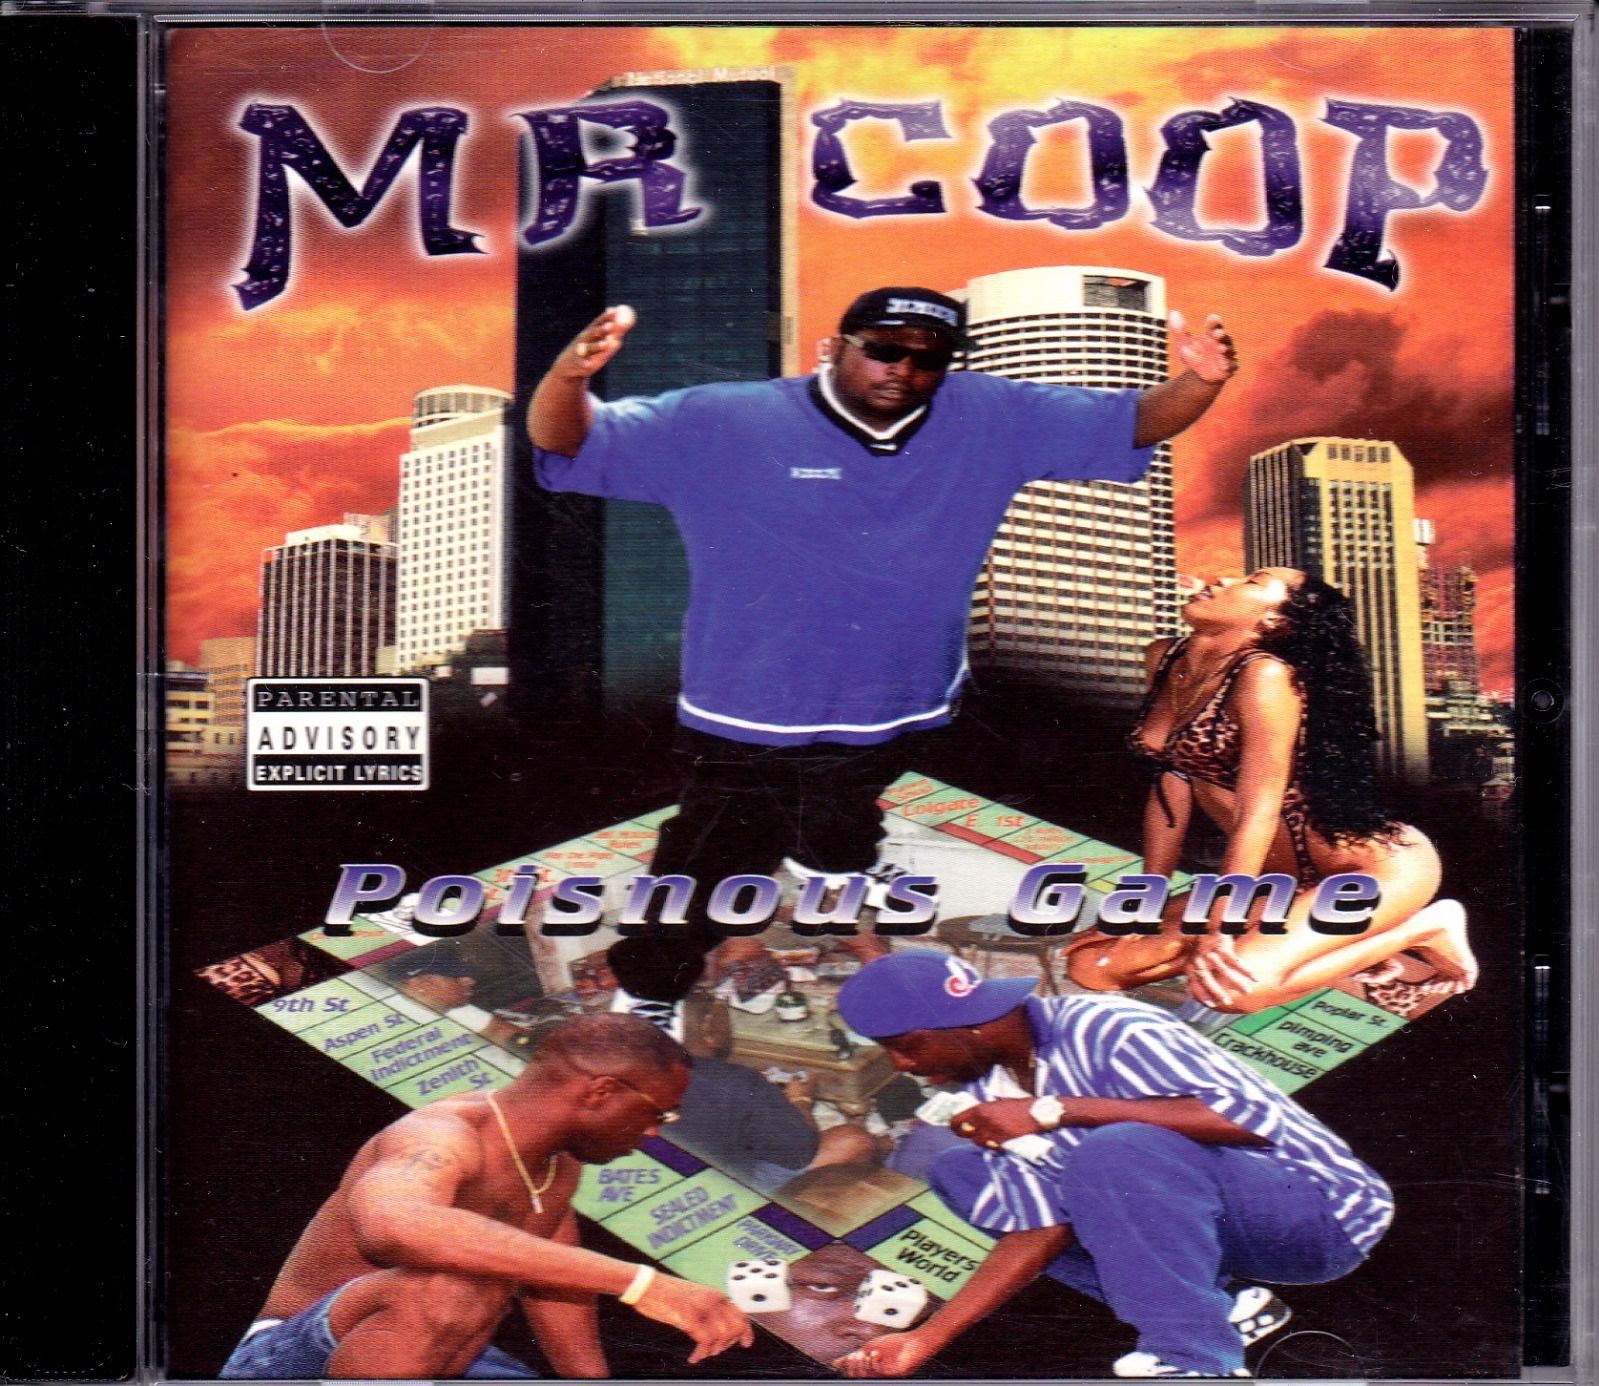 Mr Coop The Chosen One SEALED Cassette Tape Rare Texas Rap 2001 Fulton Ent.  Oop